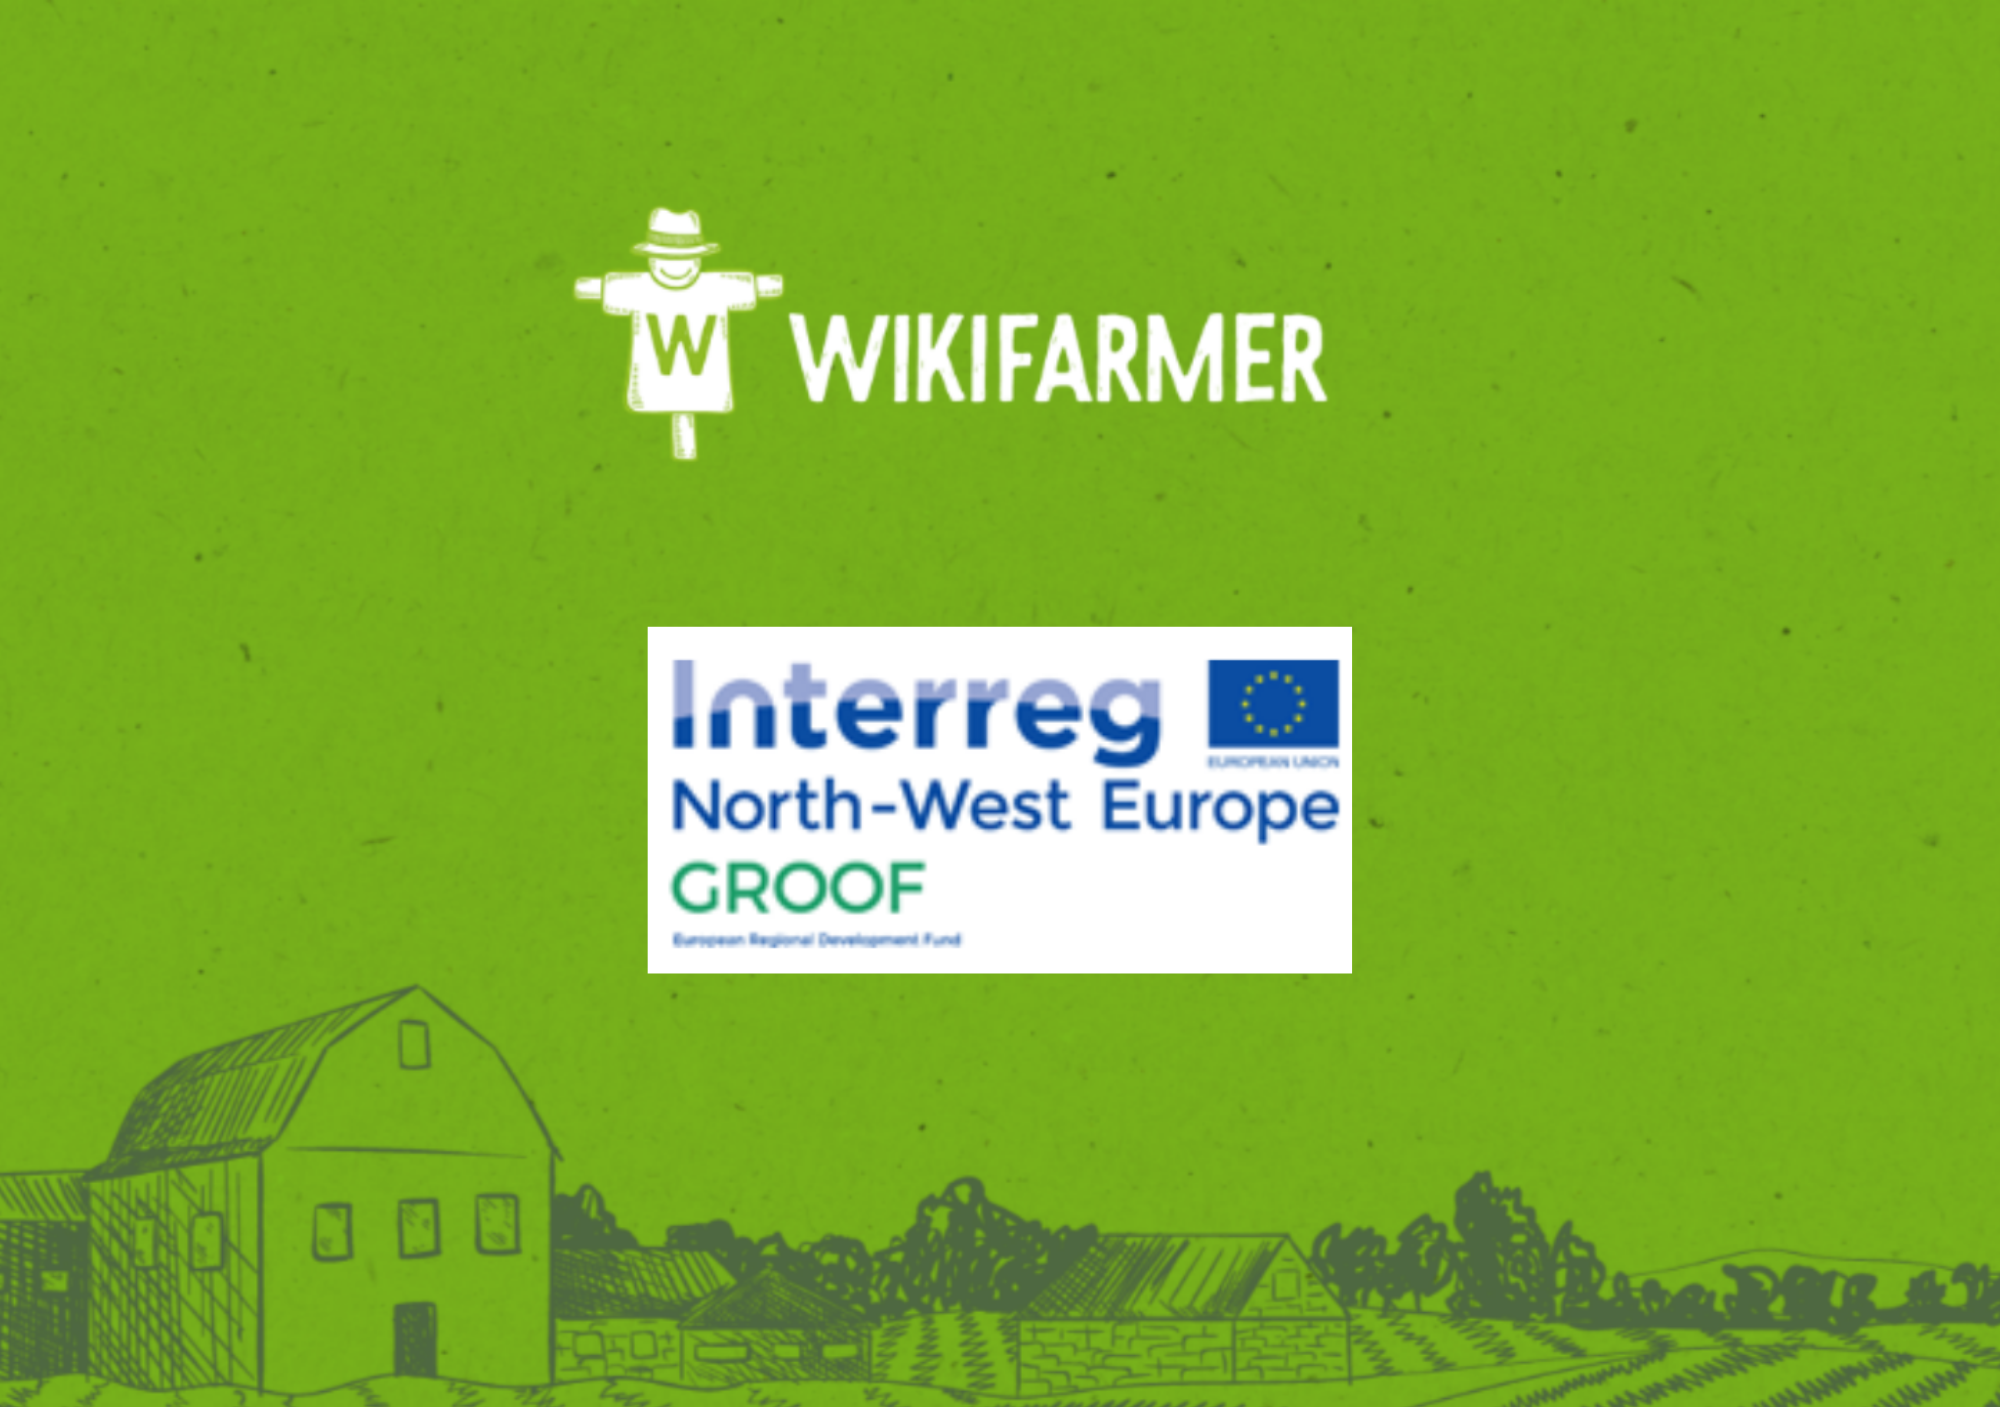 Partnership between Wikifarmer and GROOF